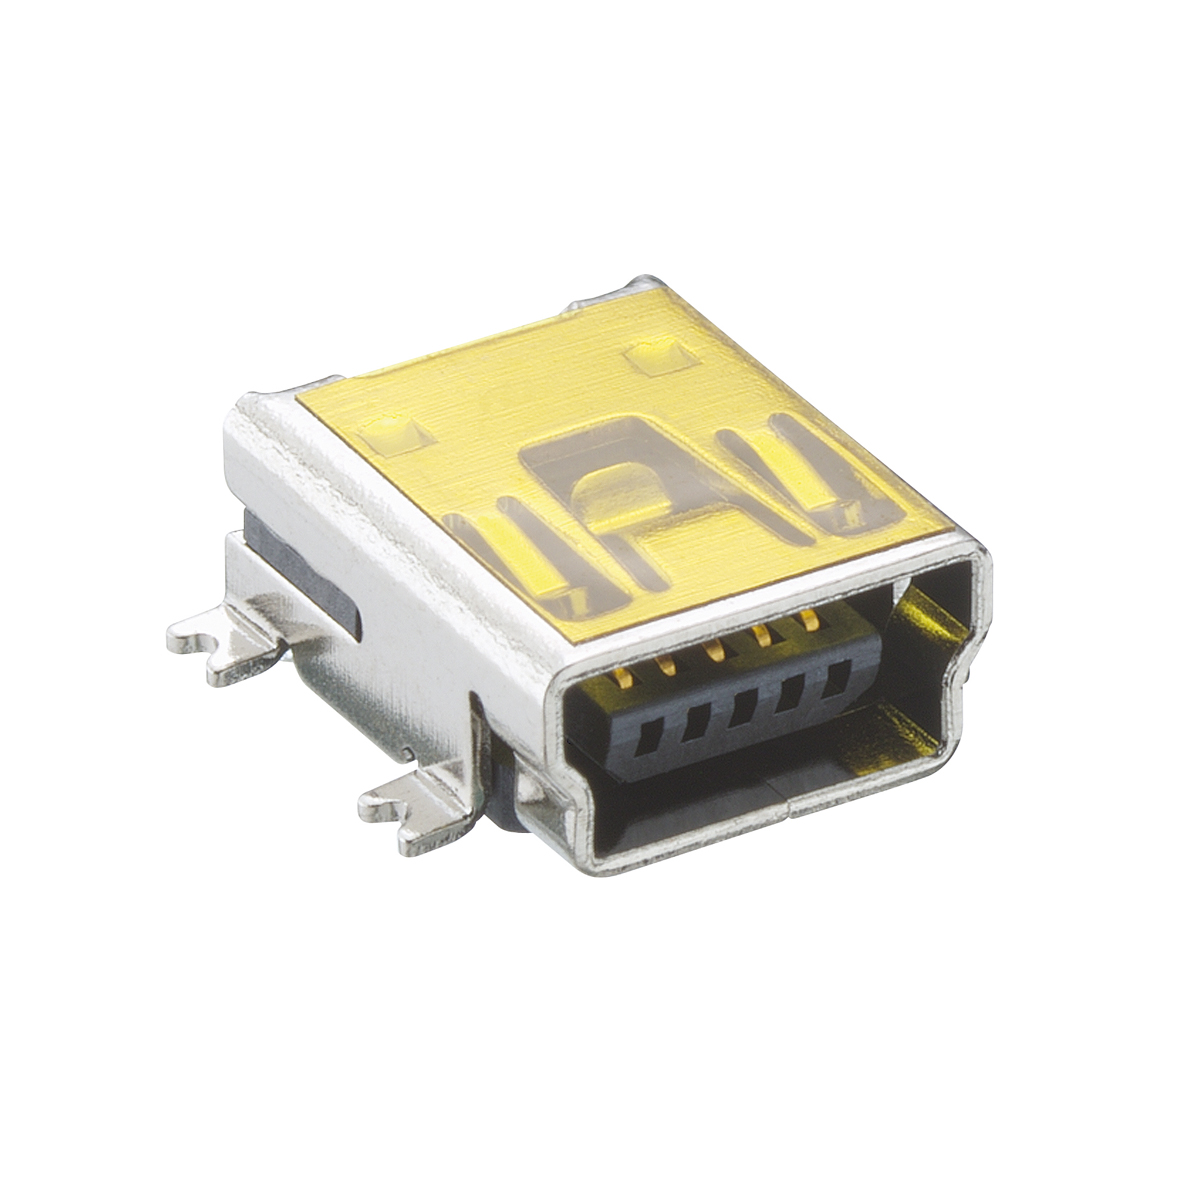 Lumberg: 2486 04 (Series 24 | USB and IEEE 1394 connectors)